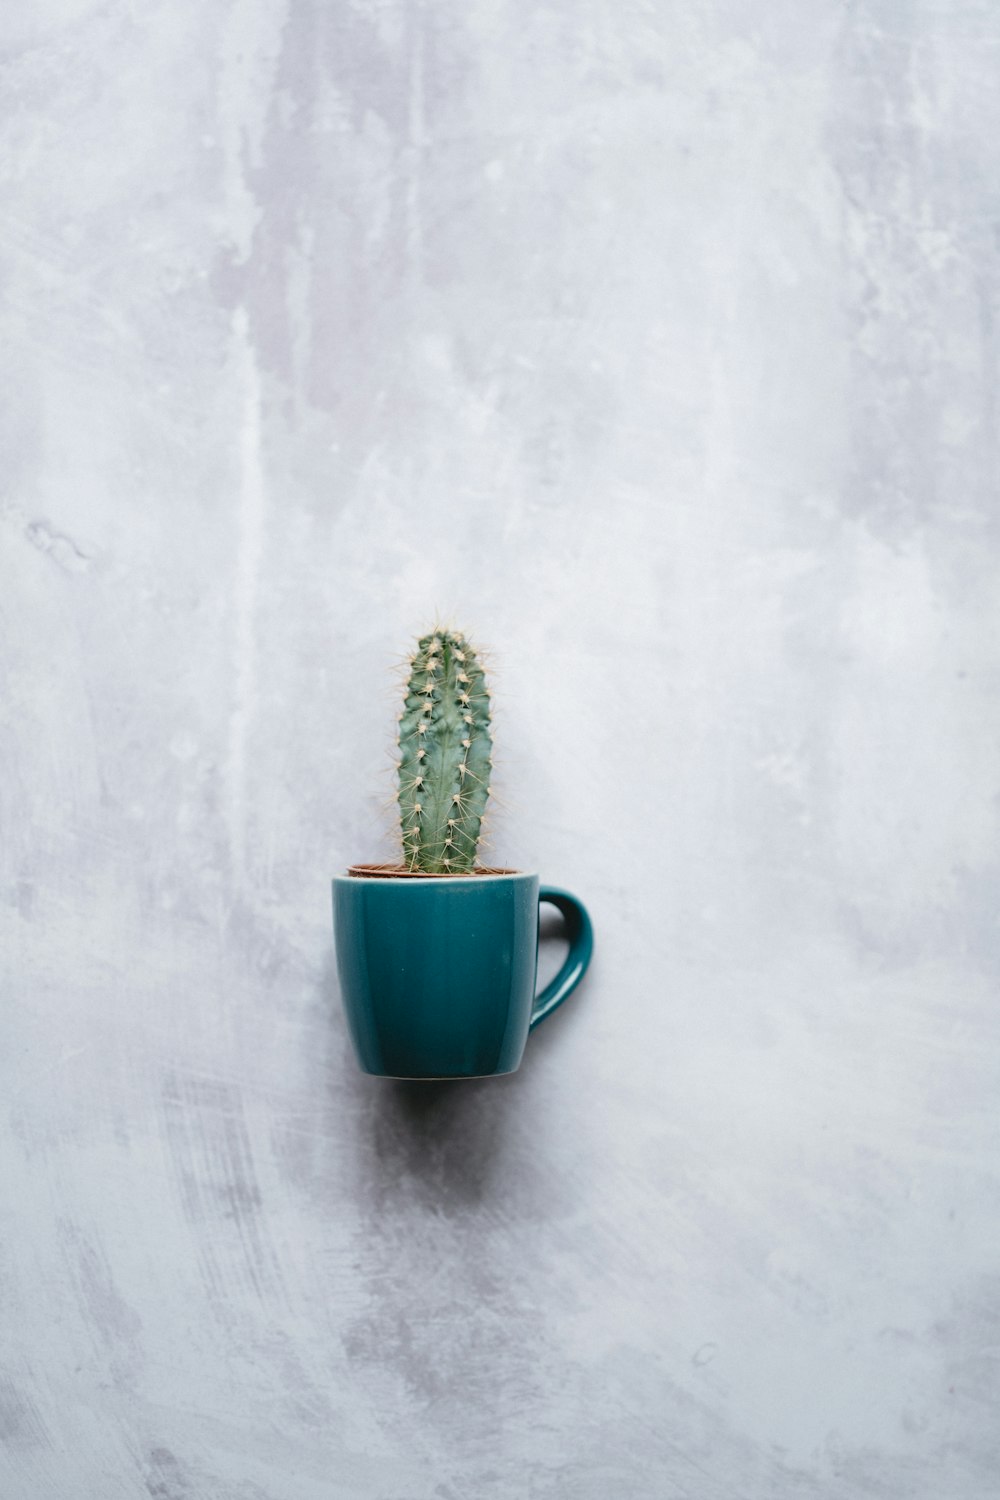 green cactus in blue ceramic mug